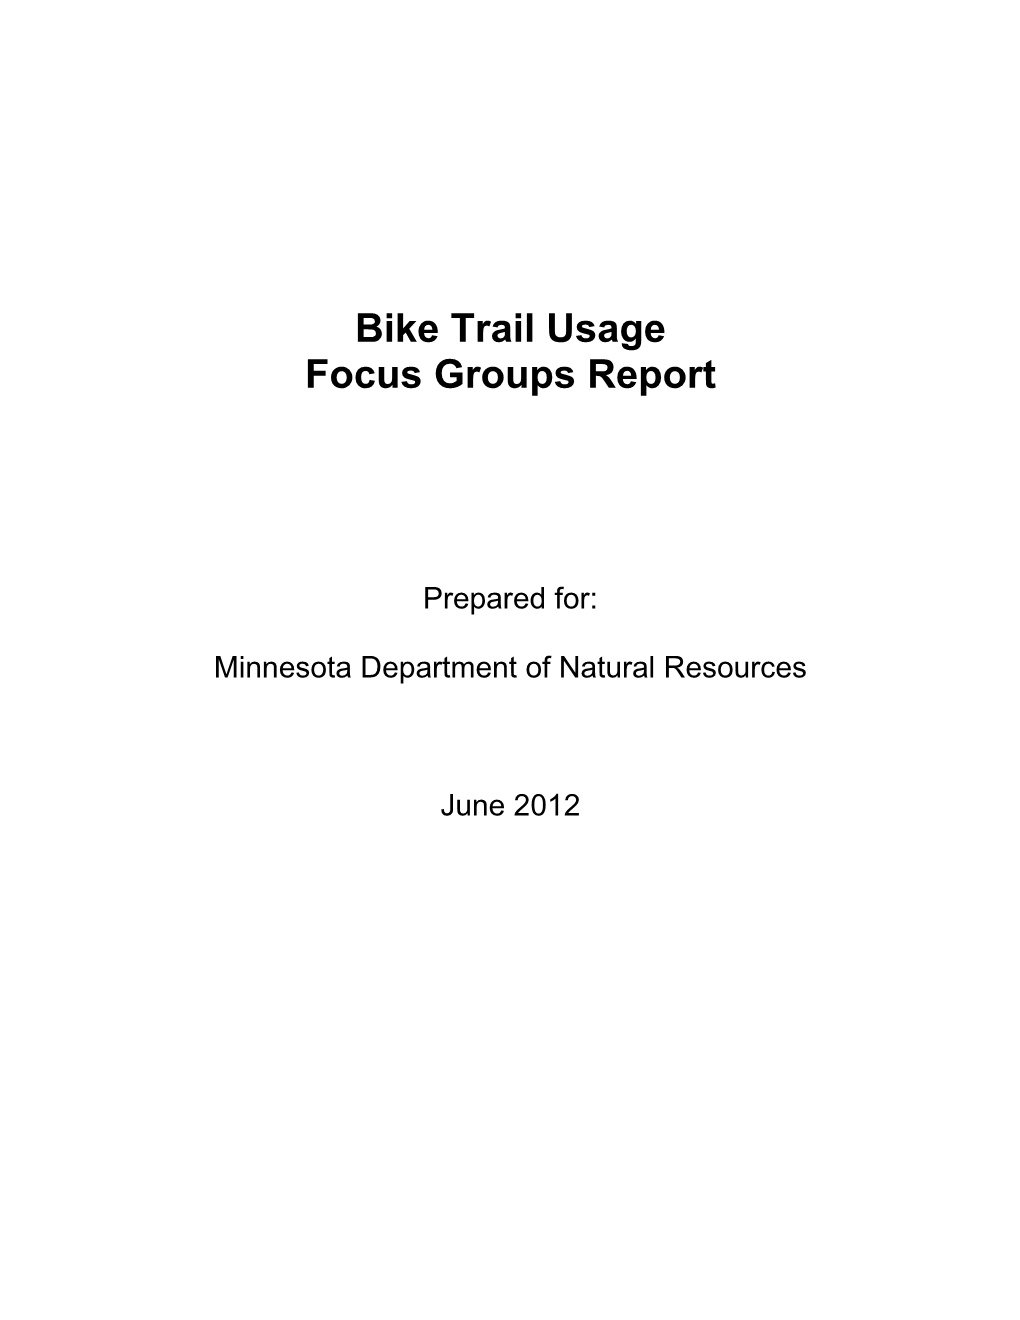 Bike Trail Usage Focus Groups Report